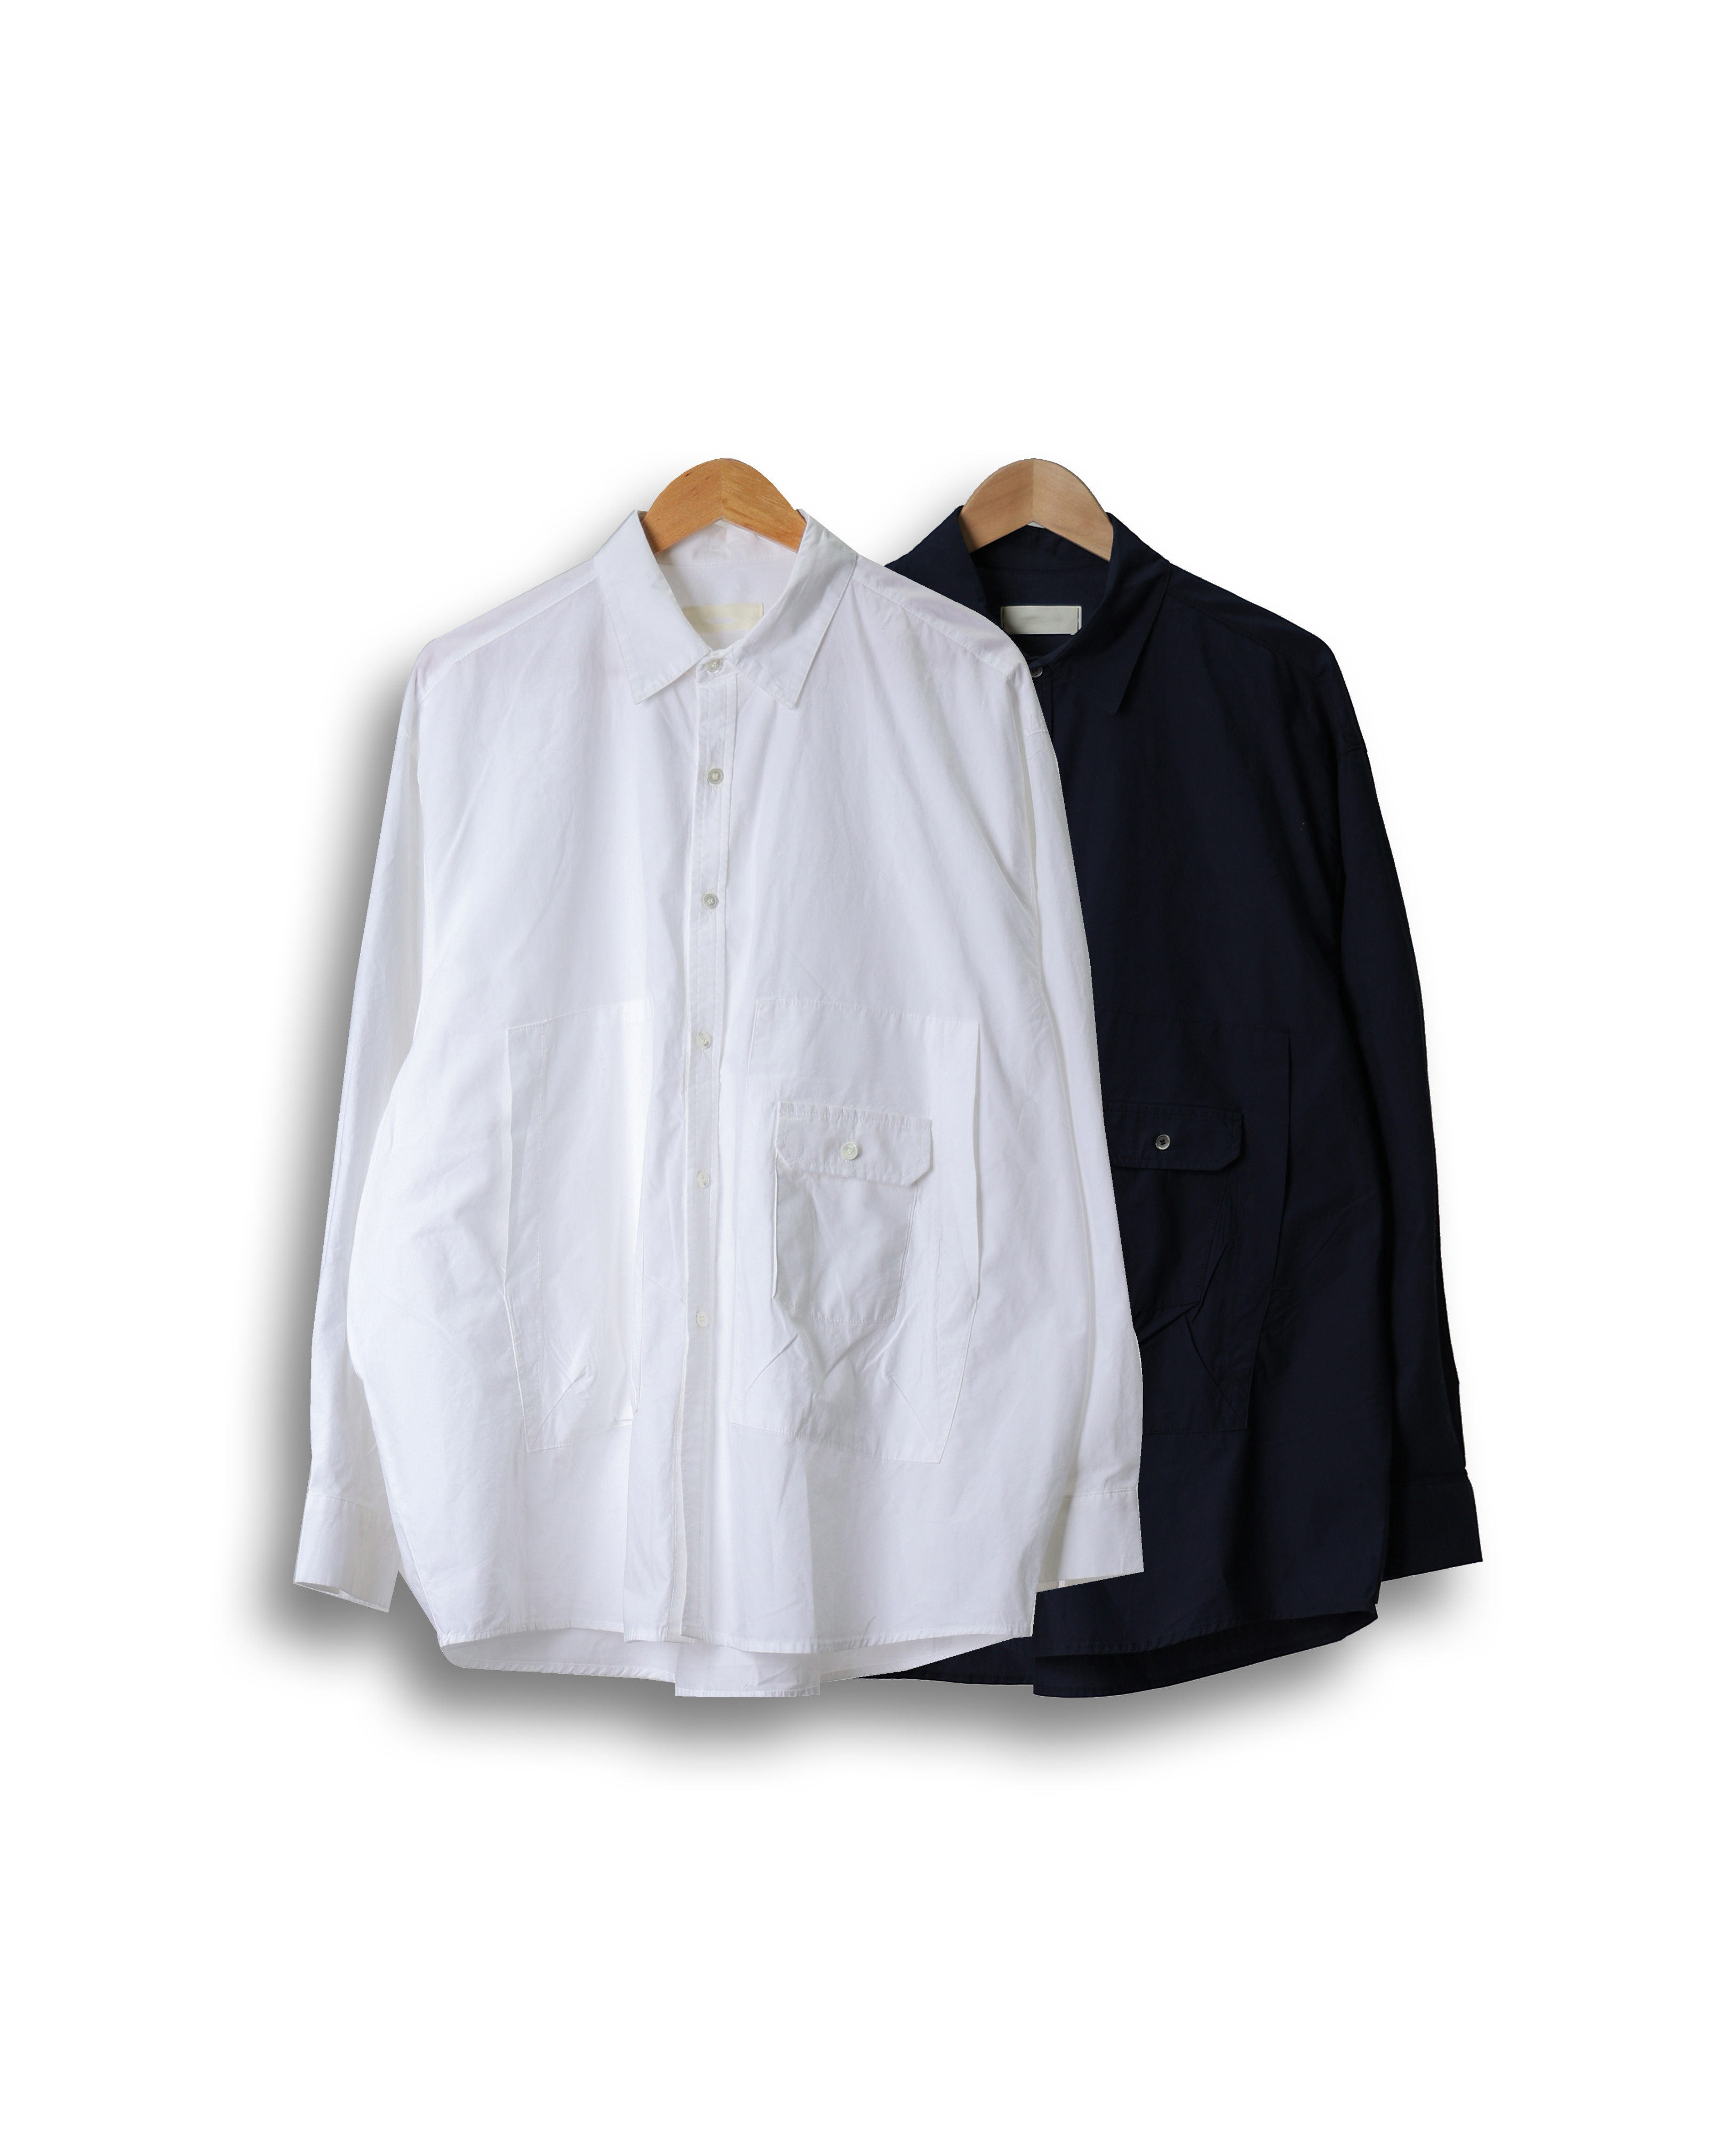 LIBERT Vita Pocket Daily Shirts (Navy/White)